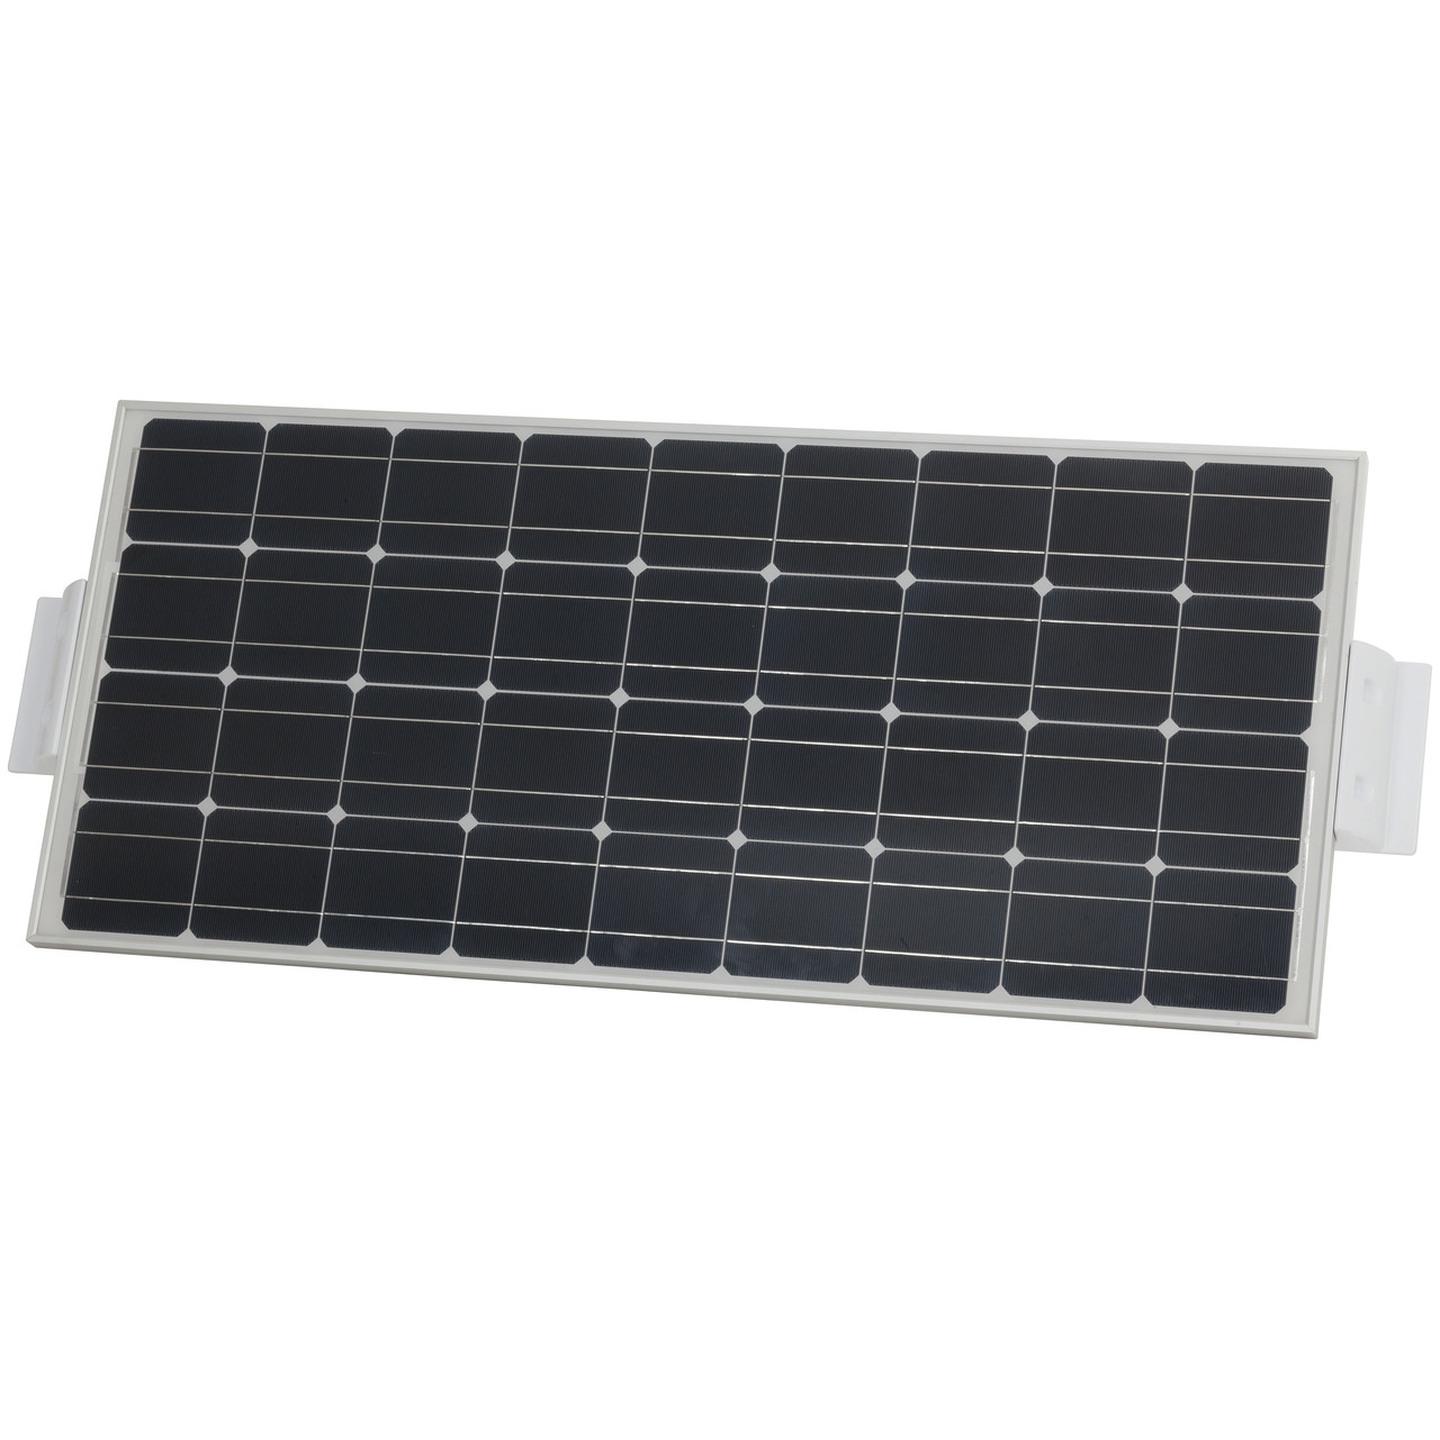 White ABS Solar Panel Spoiler Mounting Brackets - Pair